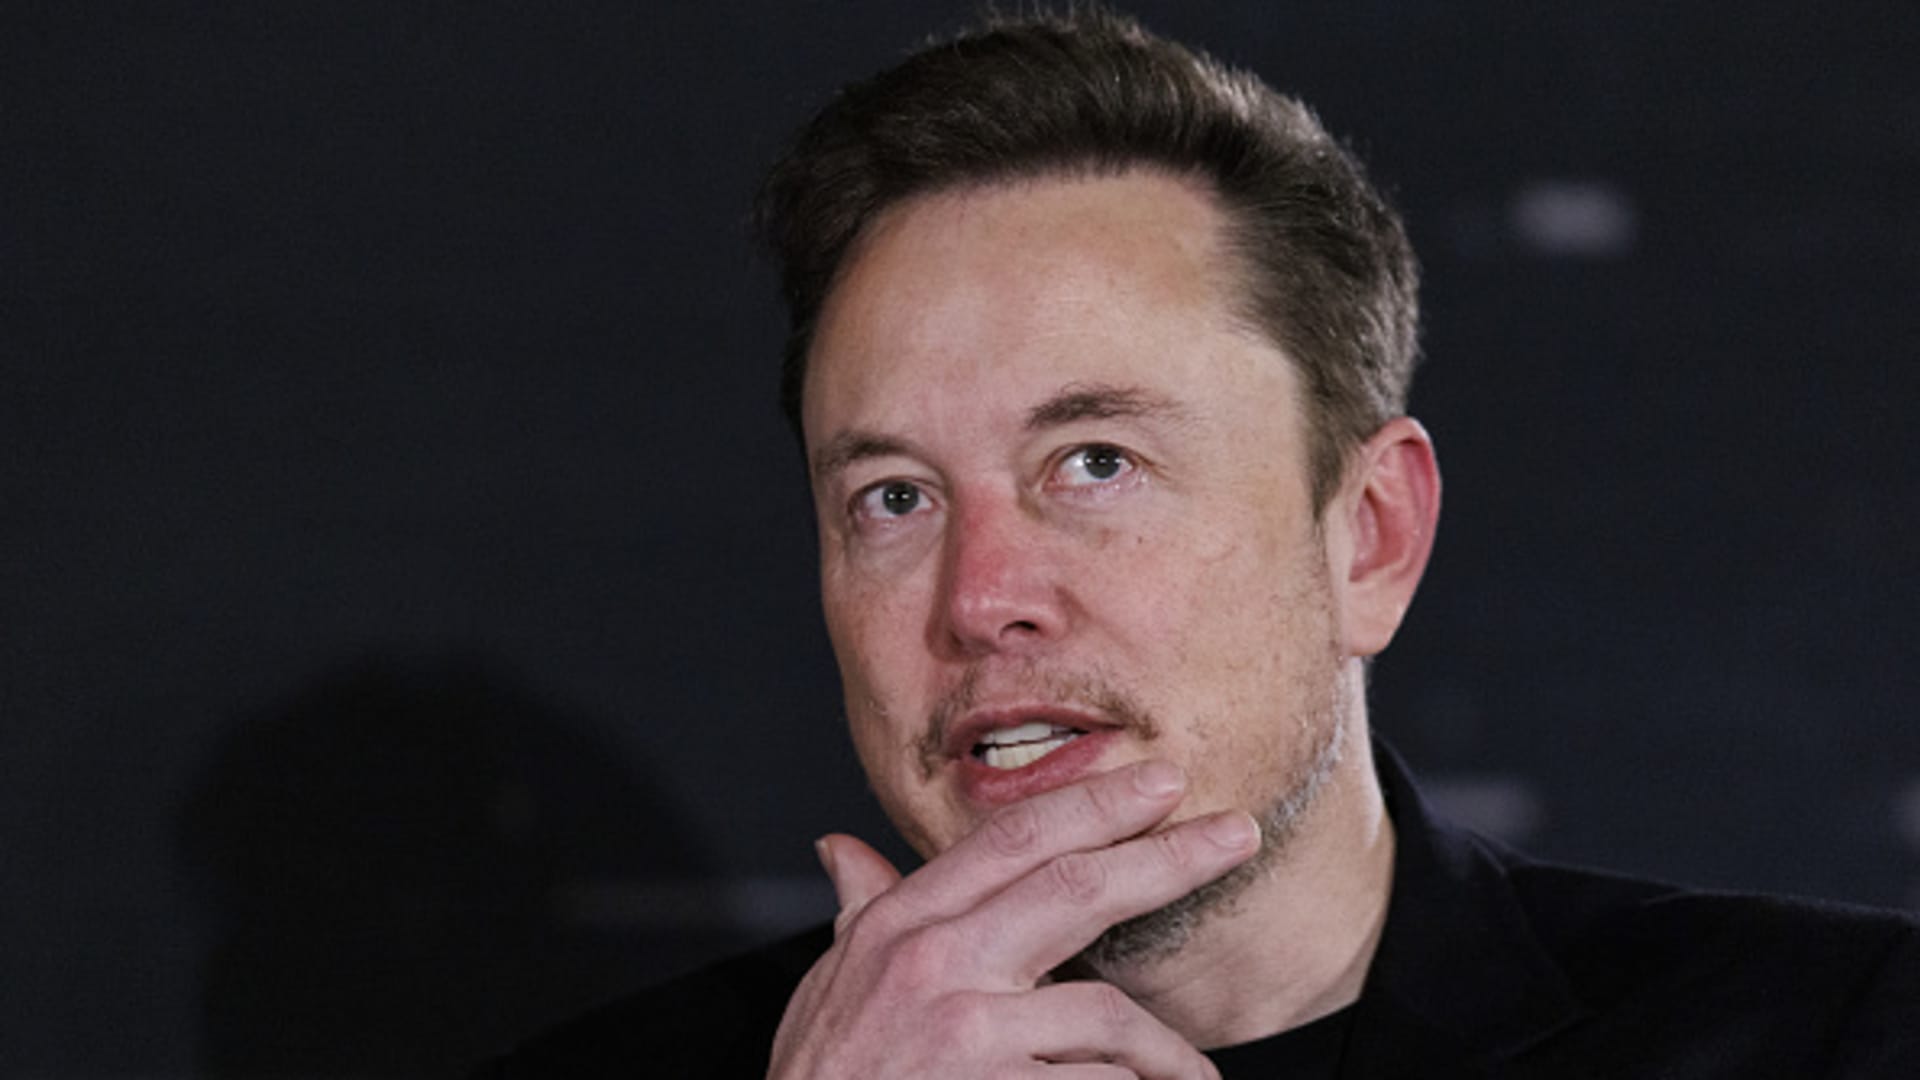 Elon Musk wants more control of Tesla, seeks 25% voting power